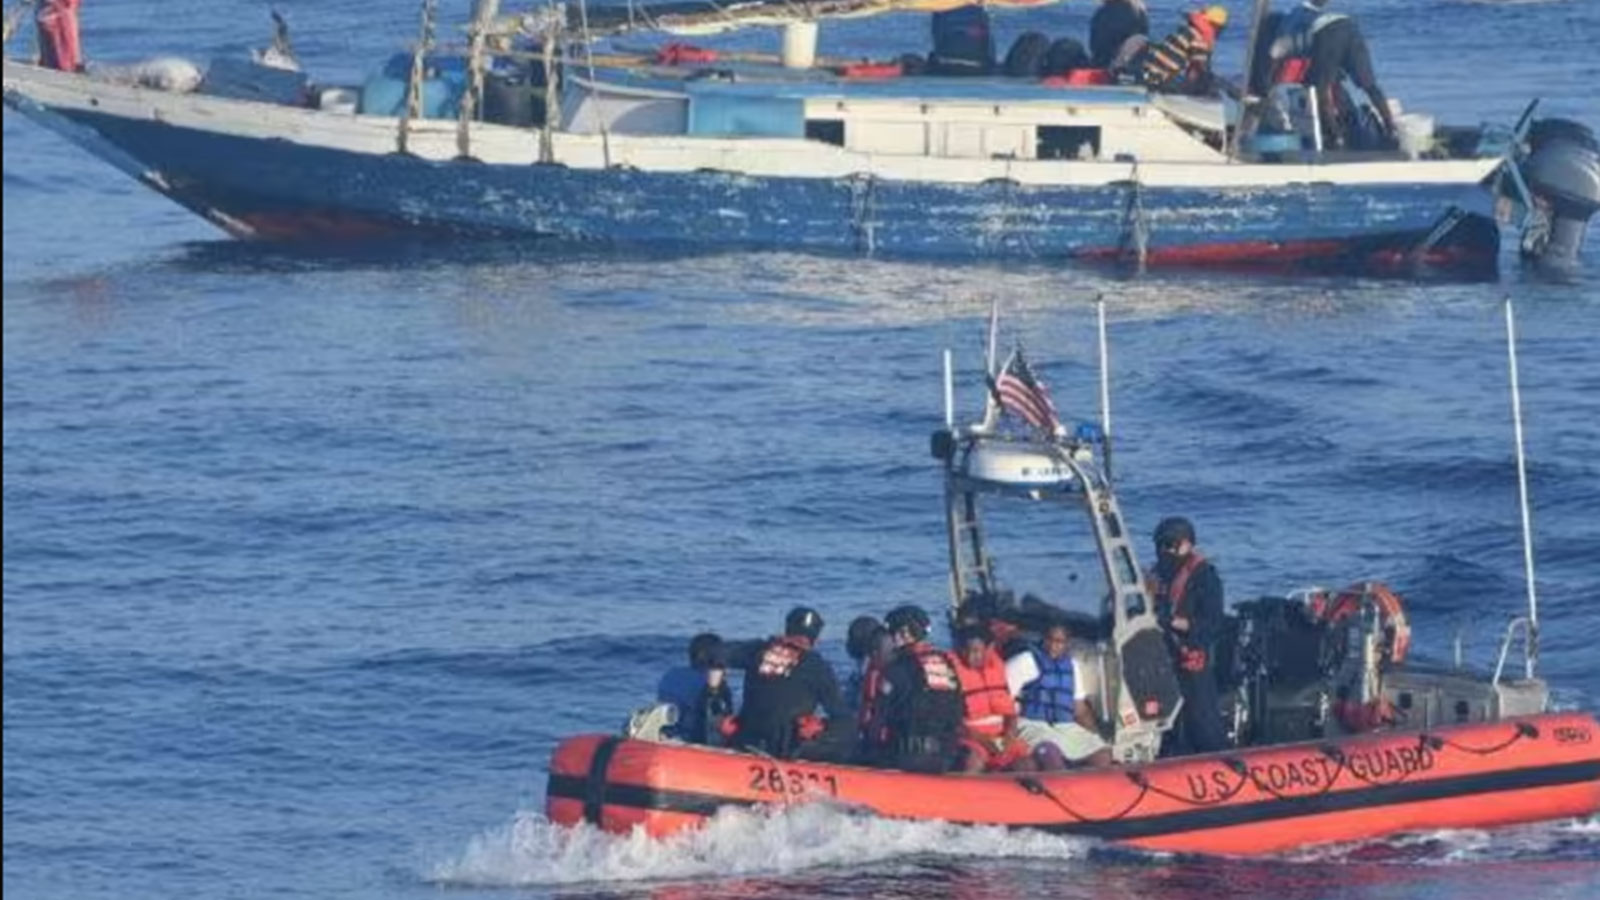 Coast Guard finds 89 migrants in sailboat, repatriates them to Haiti